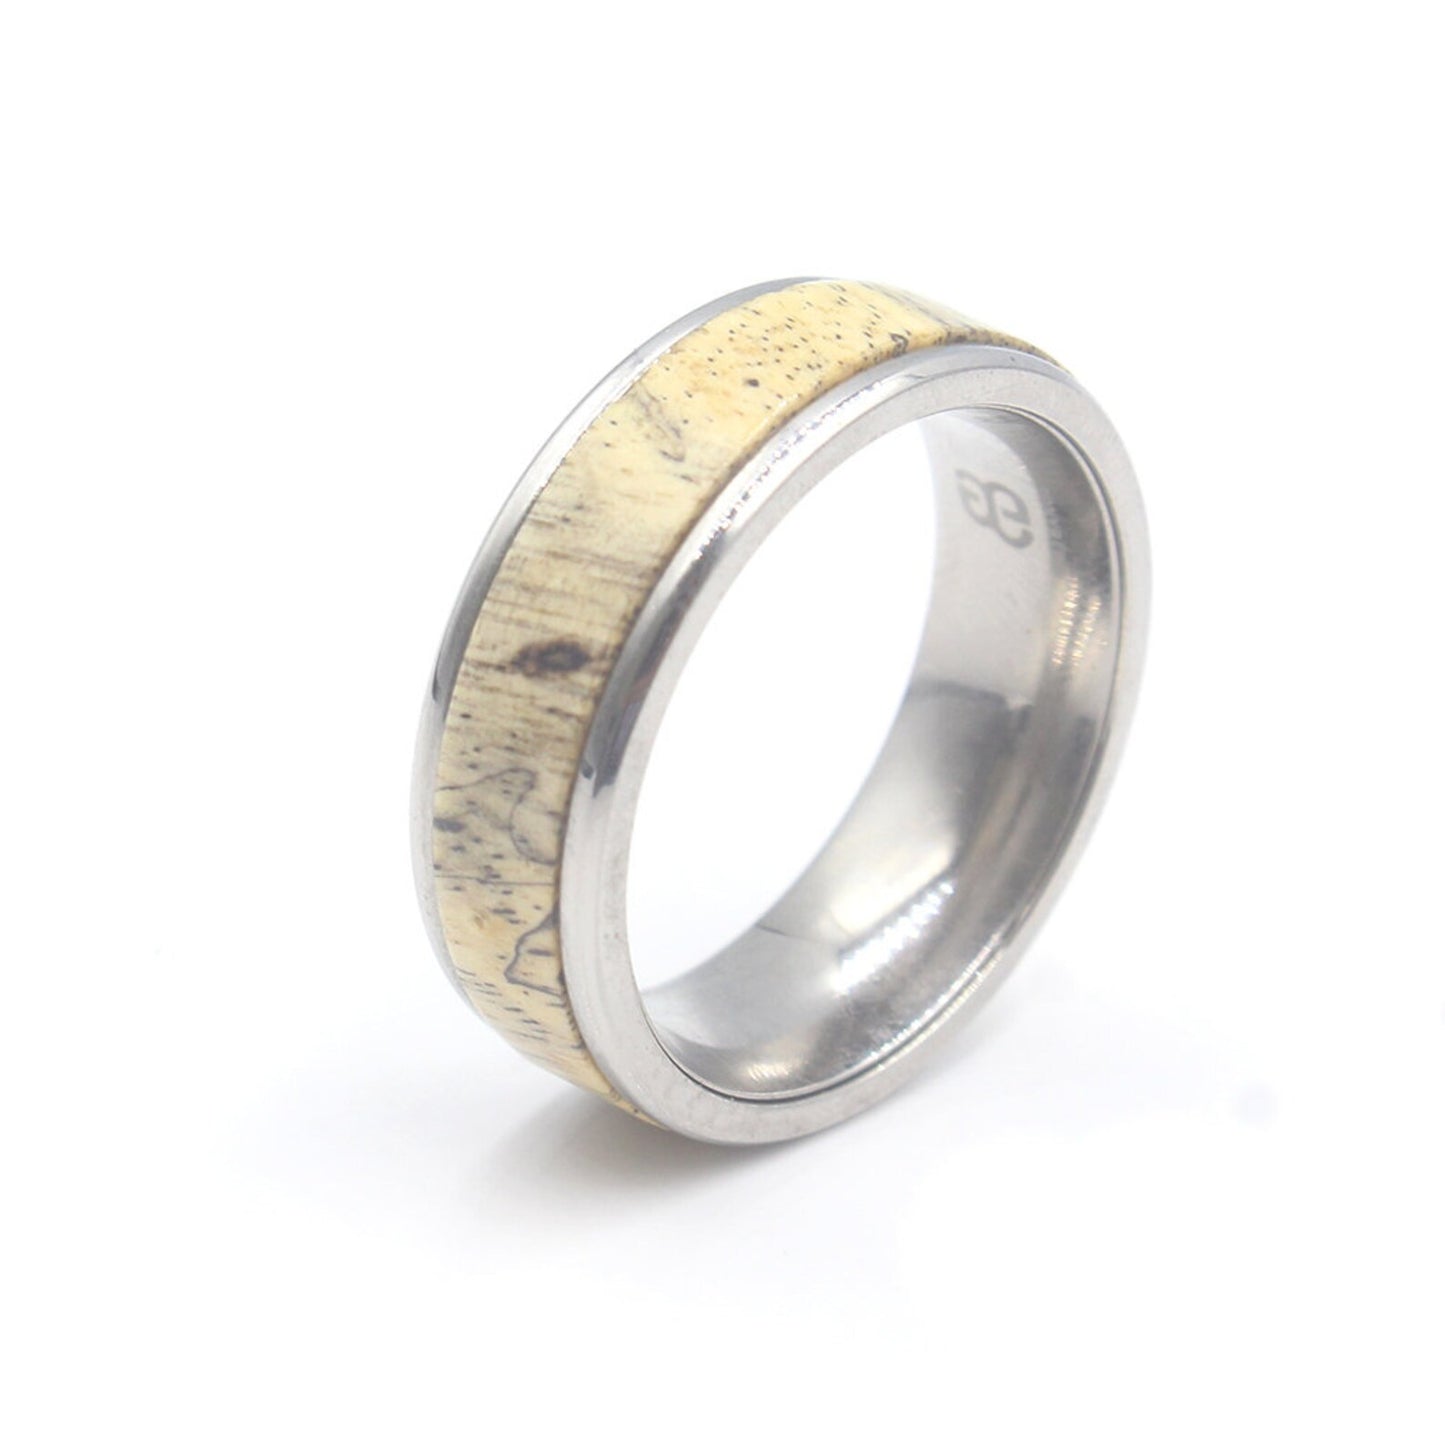 Spalted Tamarind Ring